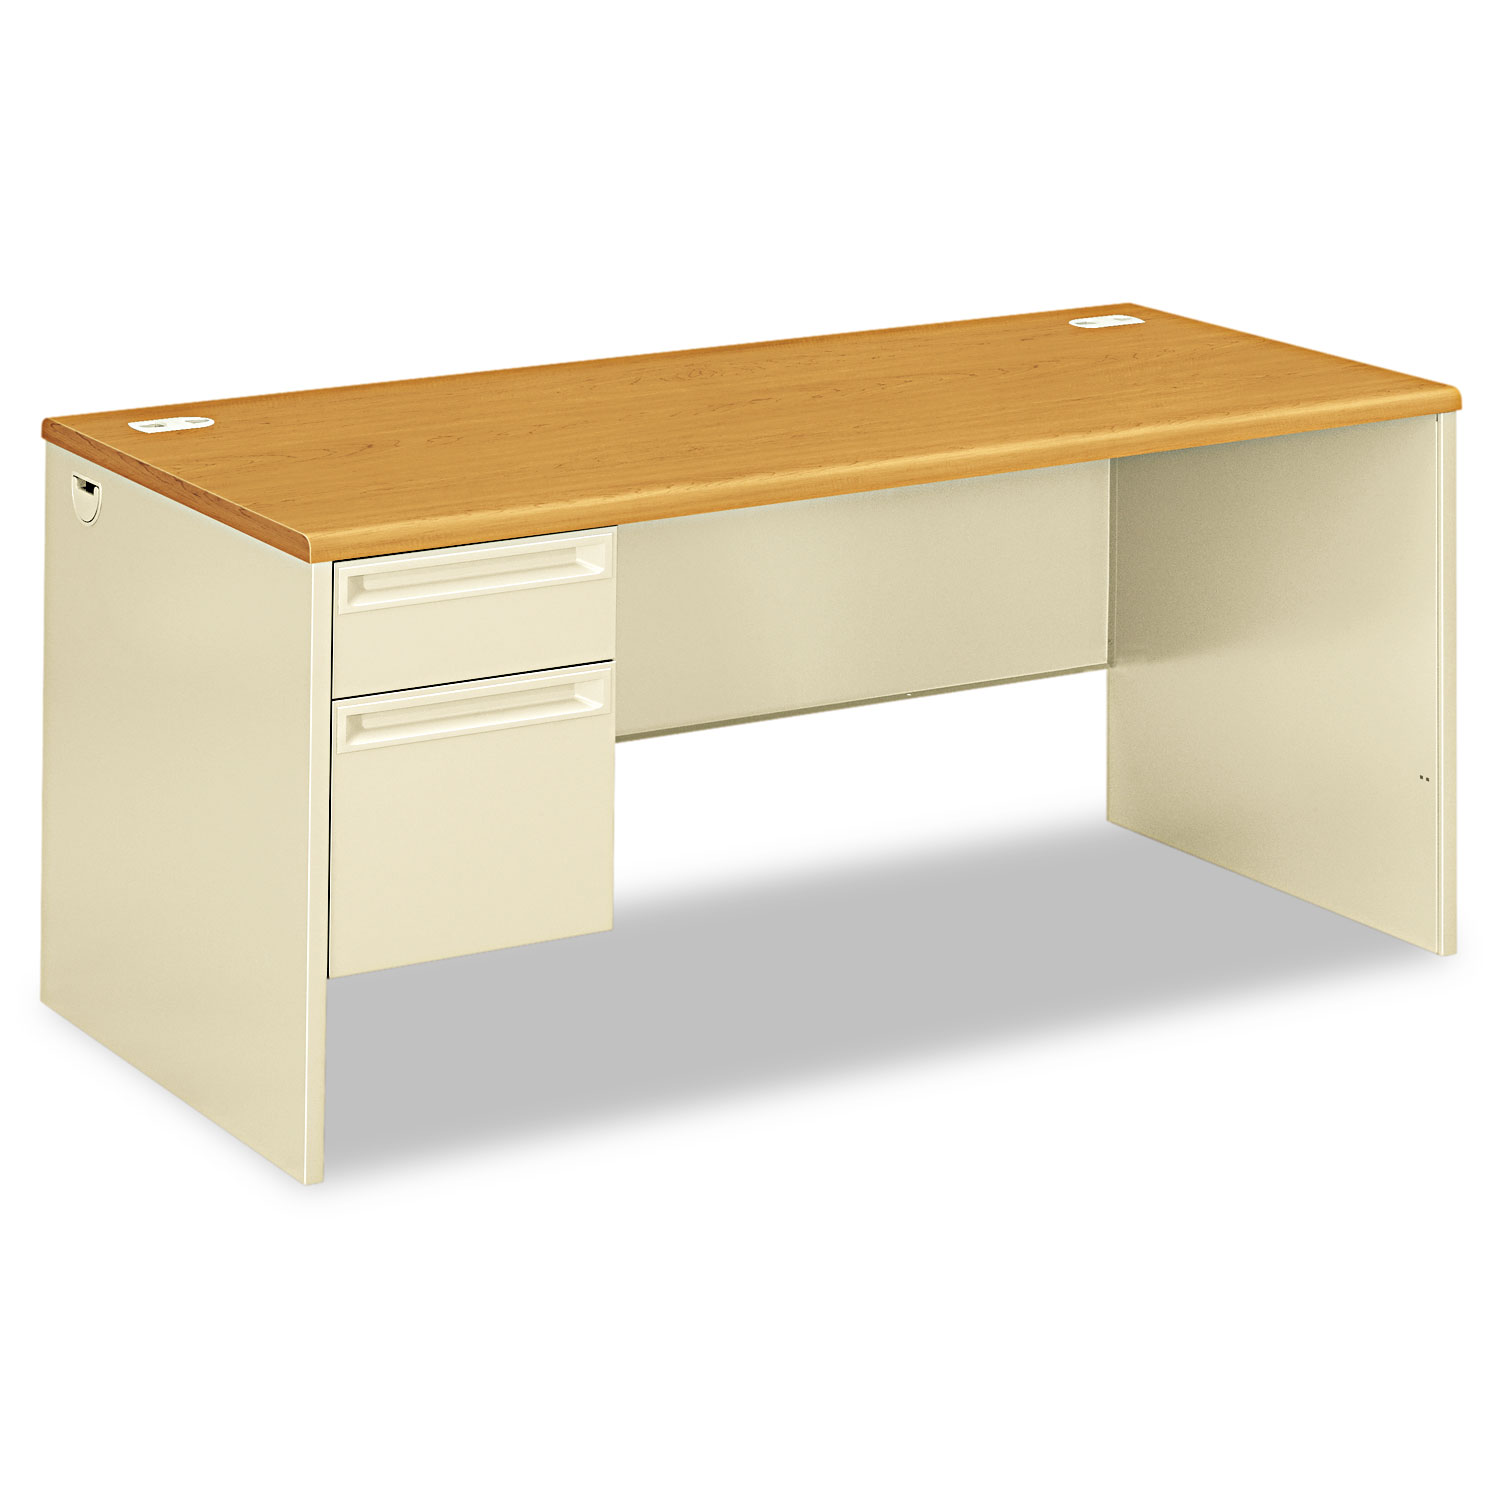  HON H38292L.C.L 38000 Series Left Pedestal Desk, 66w x 30d x 29.5h, Harvest/Putty (HON38292LCL) 